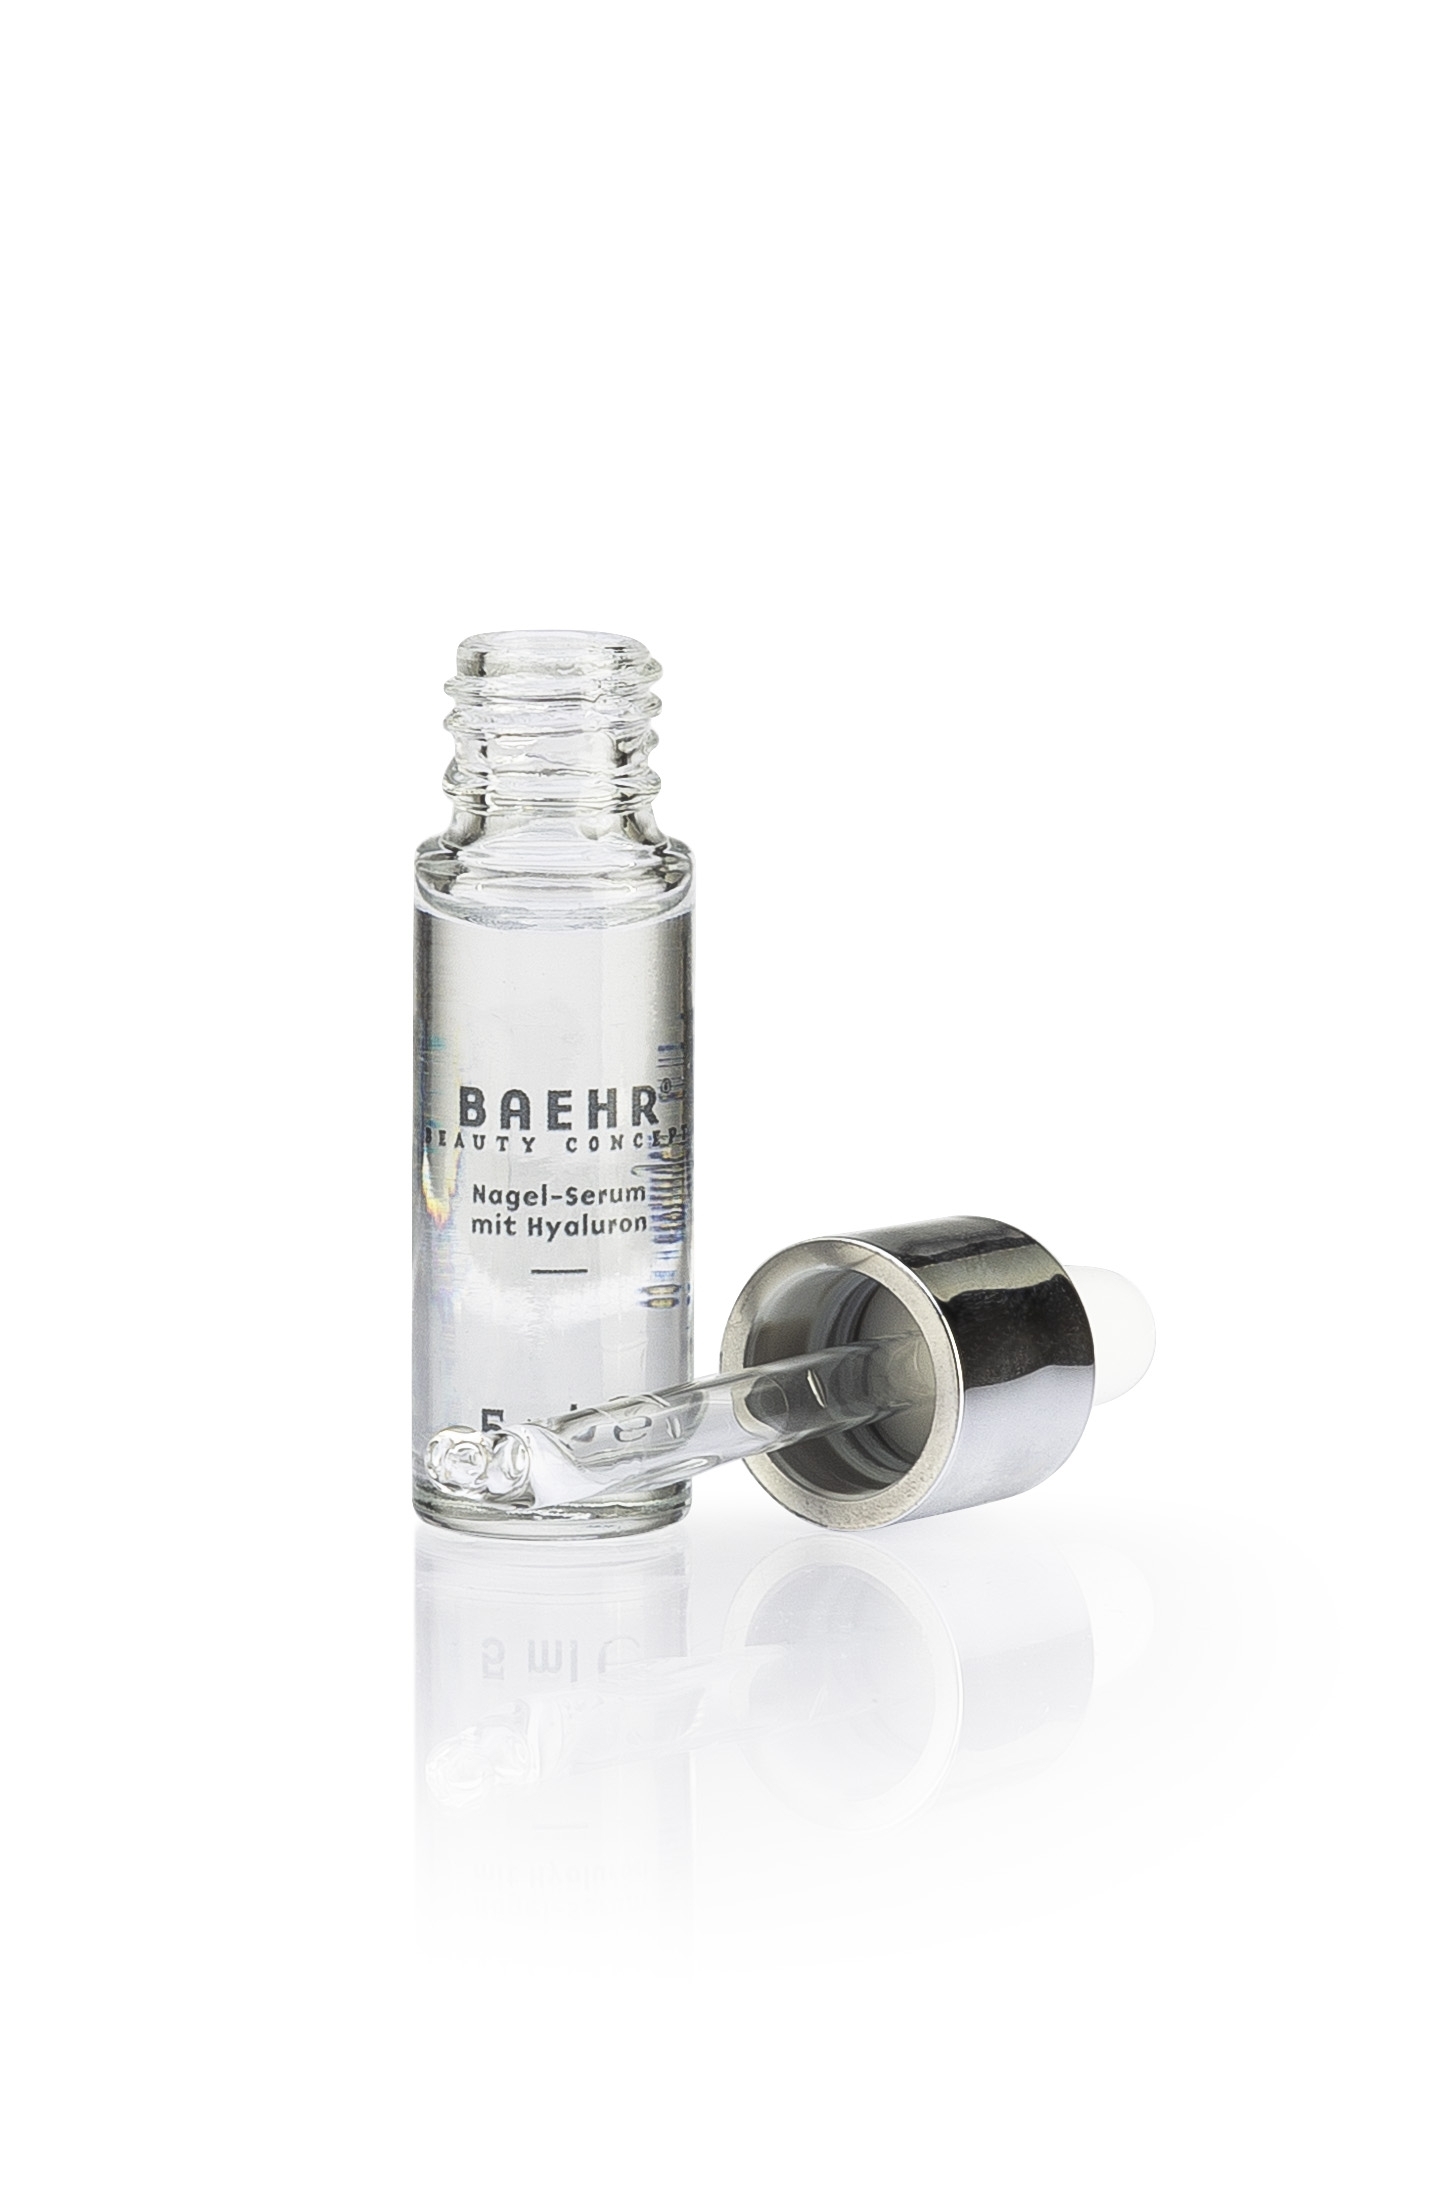 BAEHR BEAUTY CONCEPT - NAILS Nagel-Serum mit Hyaluron Pipettenflasche 5ml